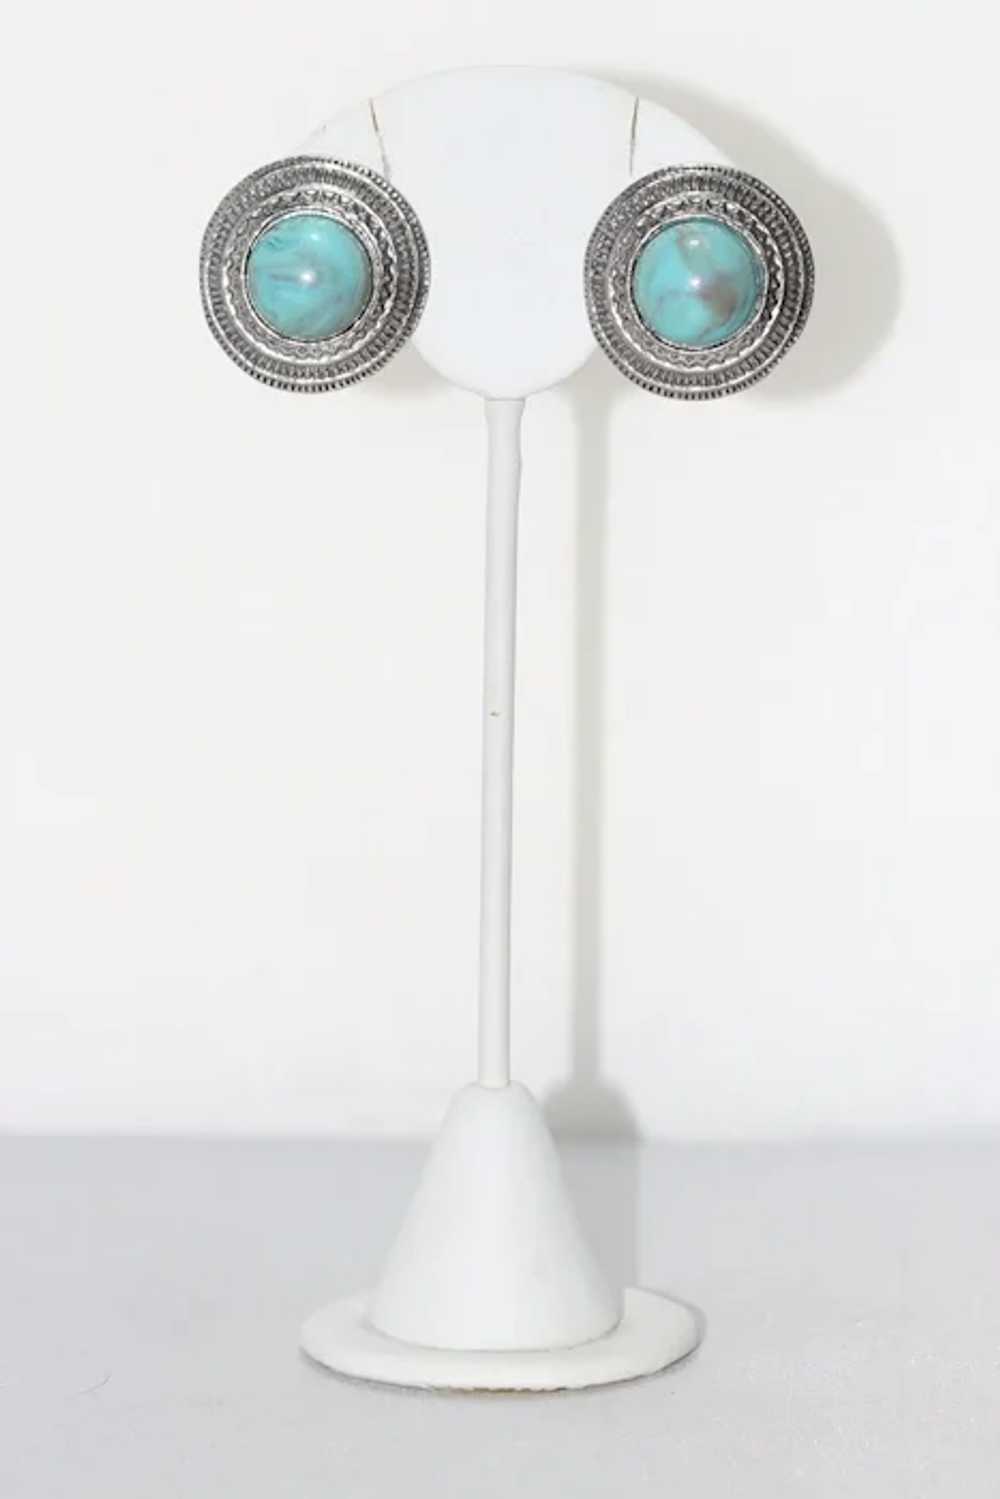 Vintage Turquoise Earrings - image 3